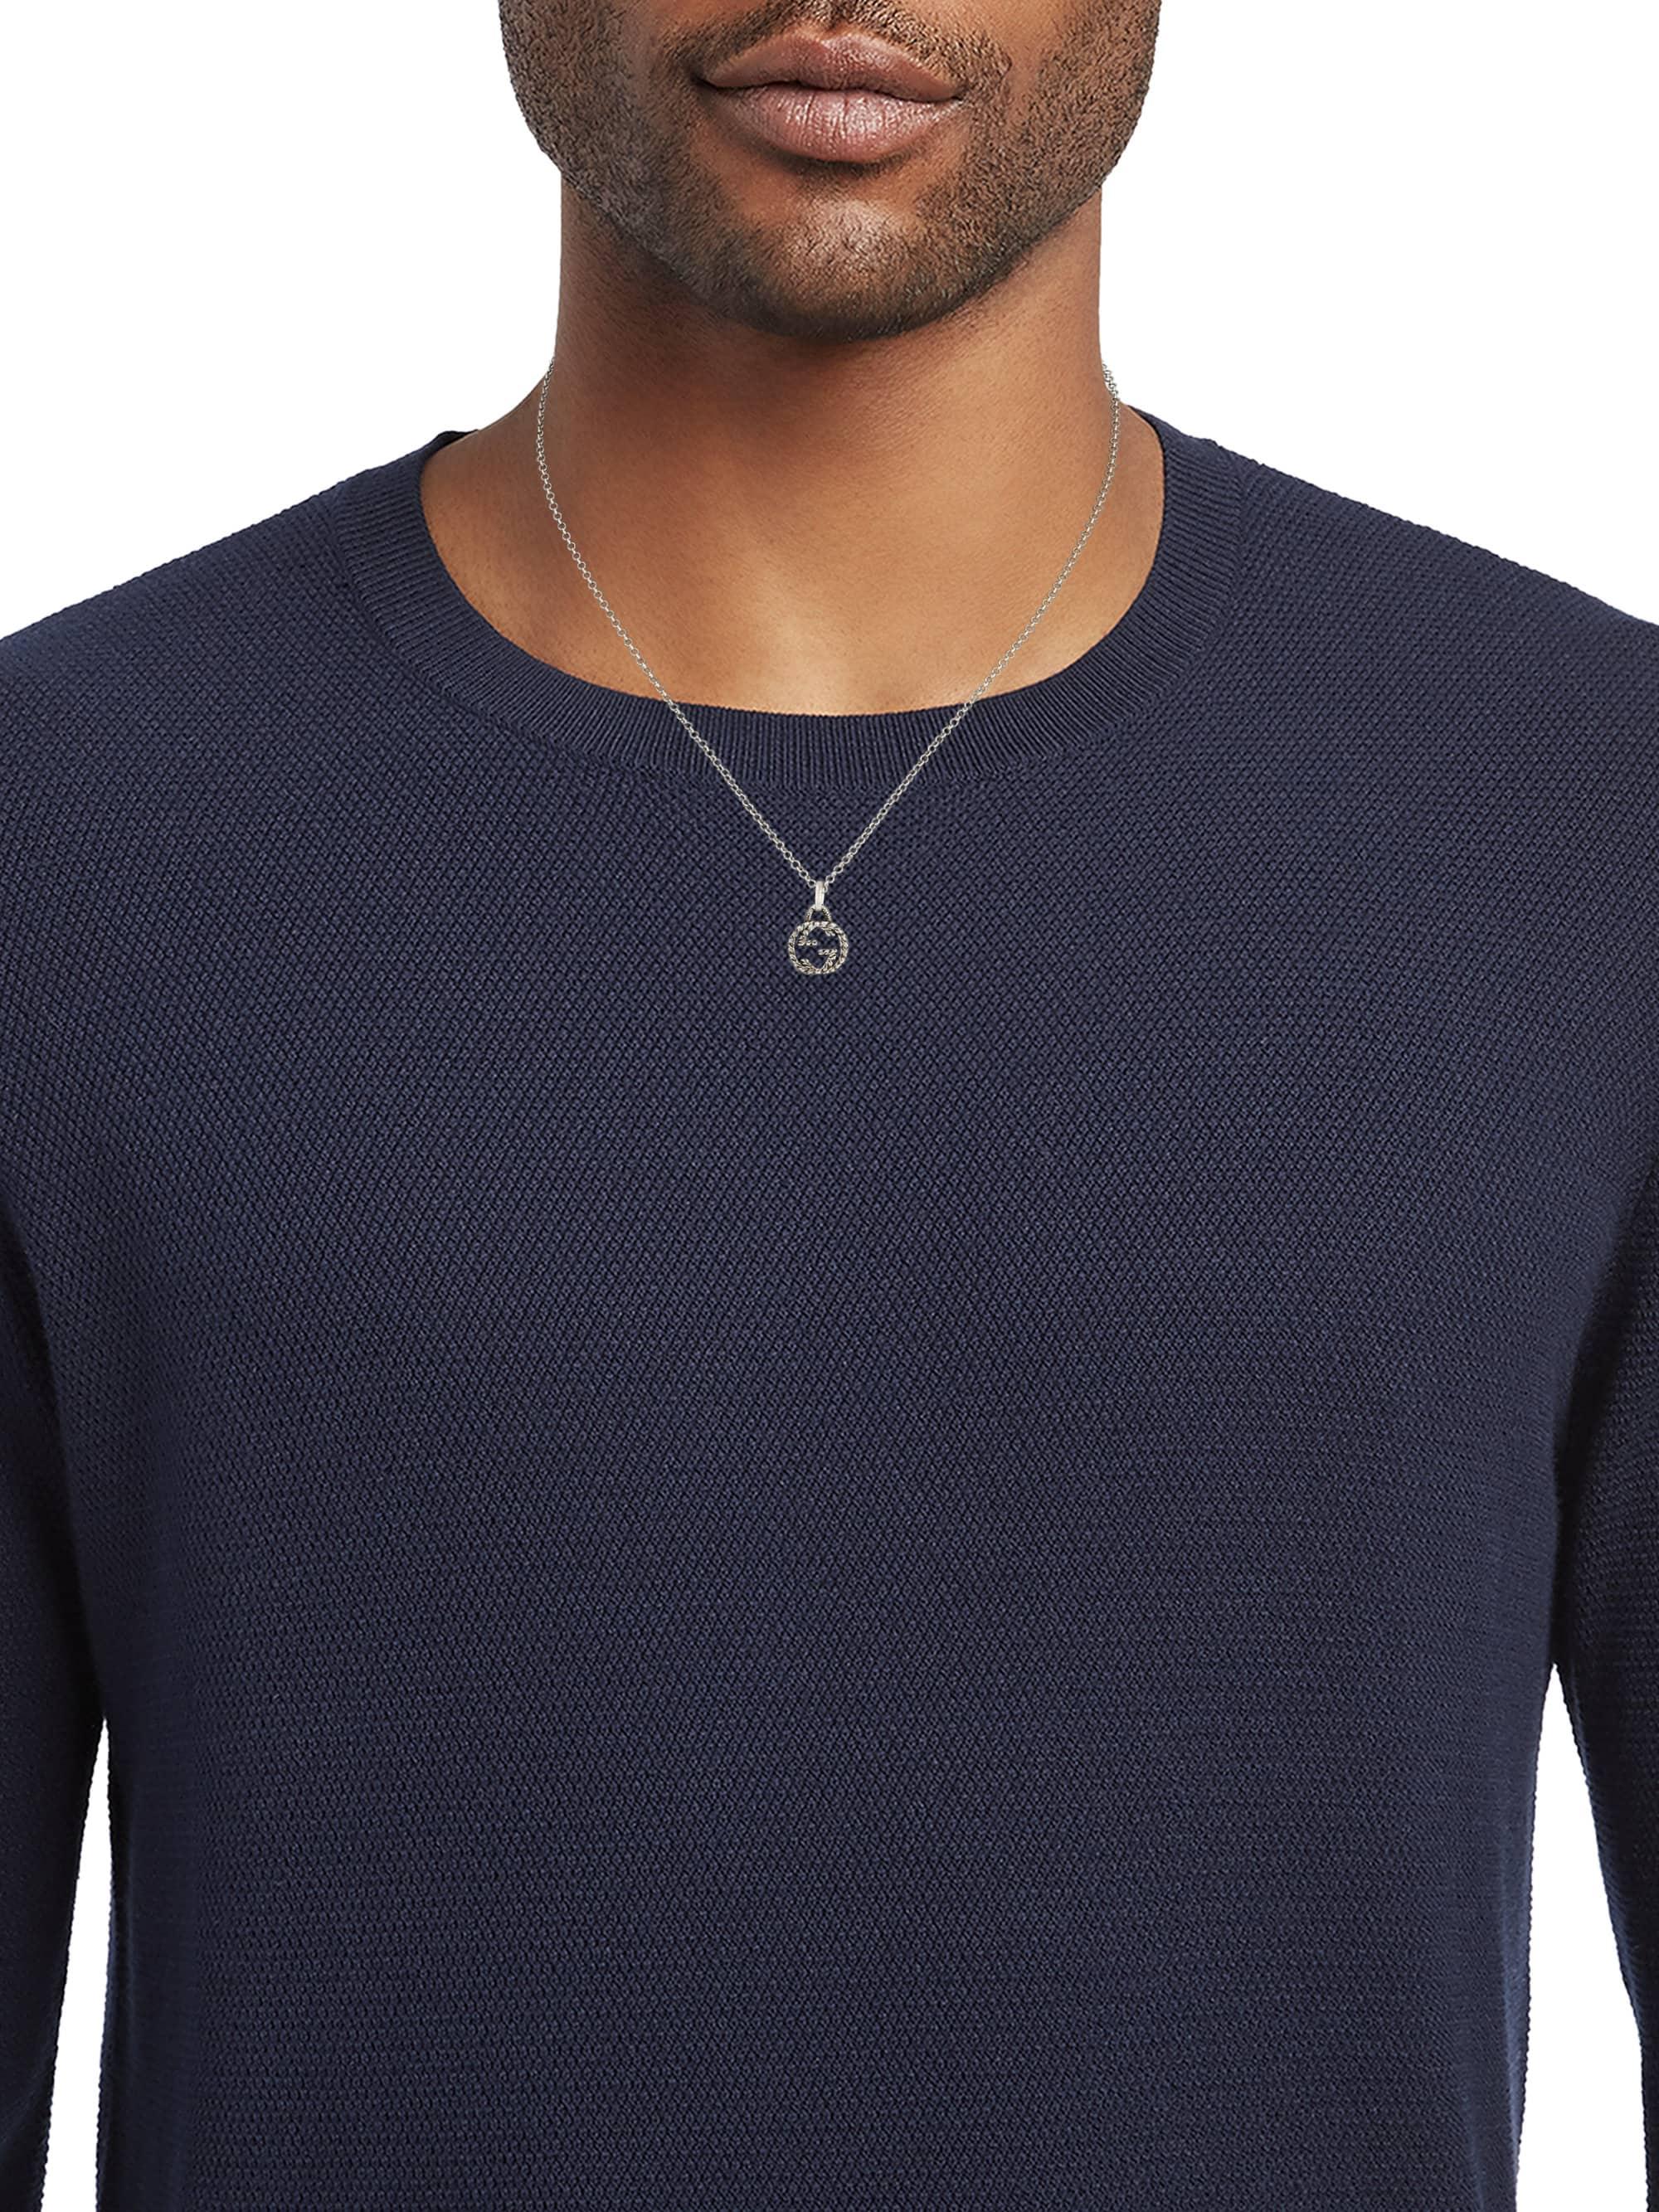 Gucci Interlocking-g Pendant Necklace in Silver (Metallic) | Lyst